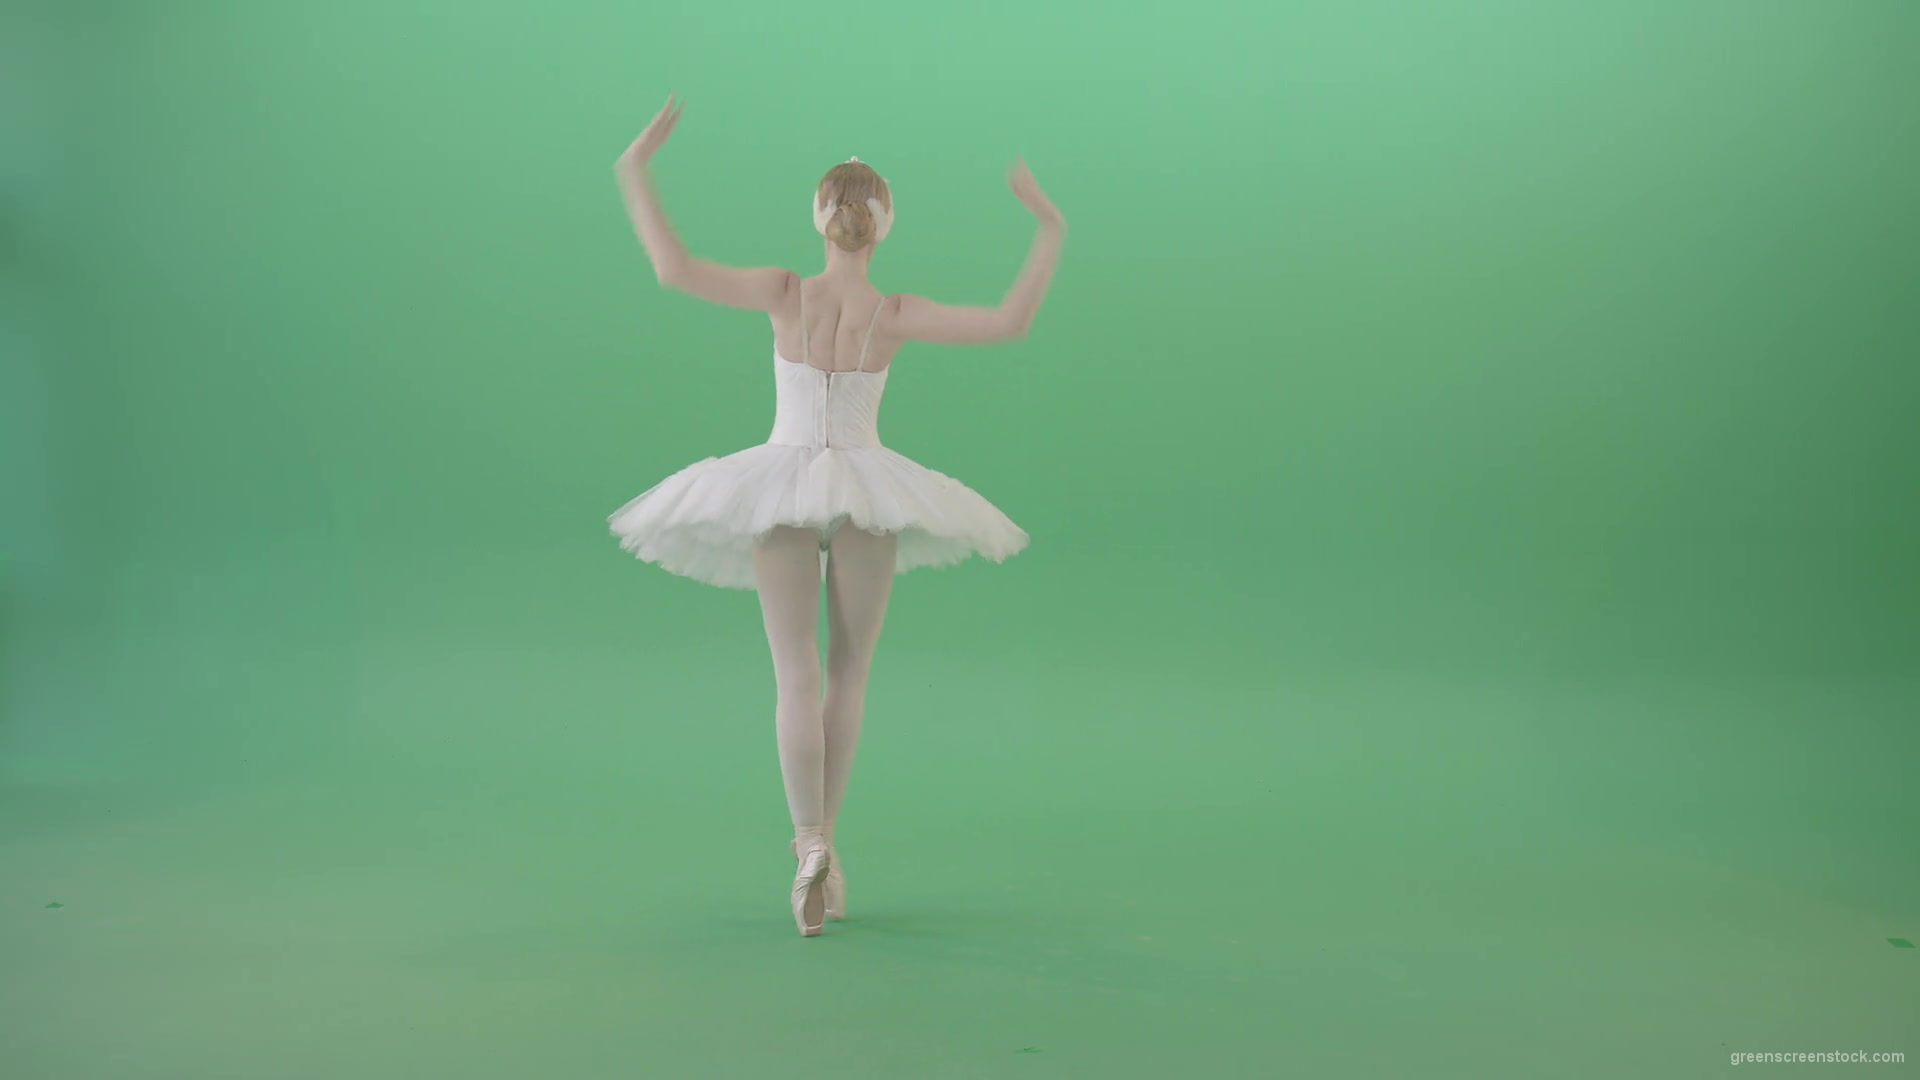 Beautiful-swan-lake-ballet-dance-ballerina-in-back-side-view-dancing-on-green-screen-4K-Video-Footage-1920_002 Green Screen Stock